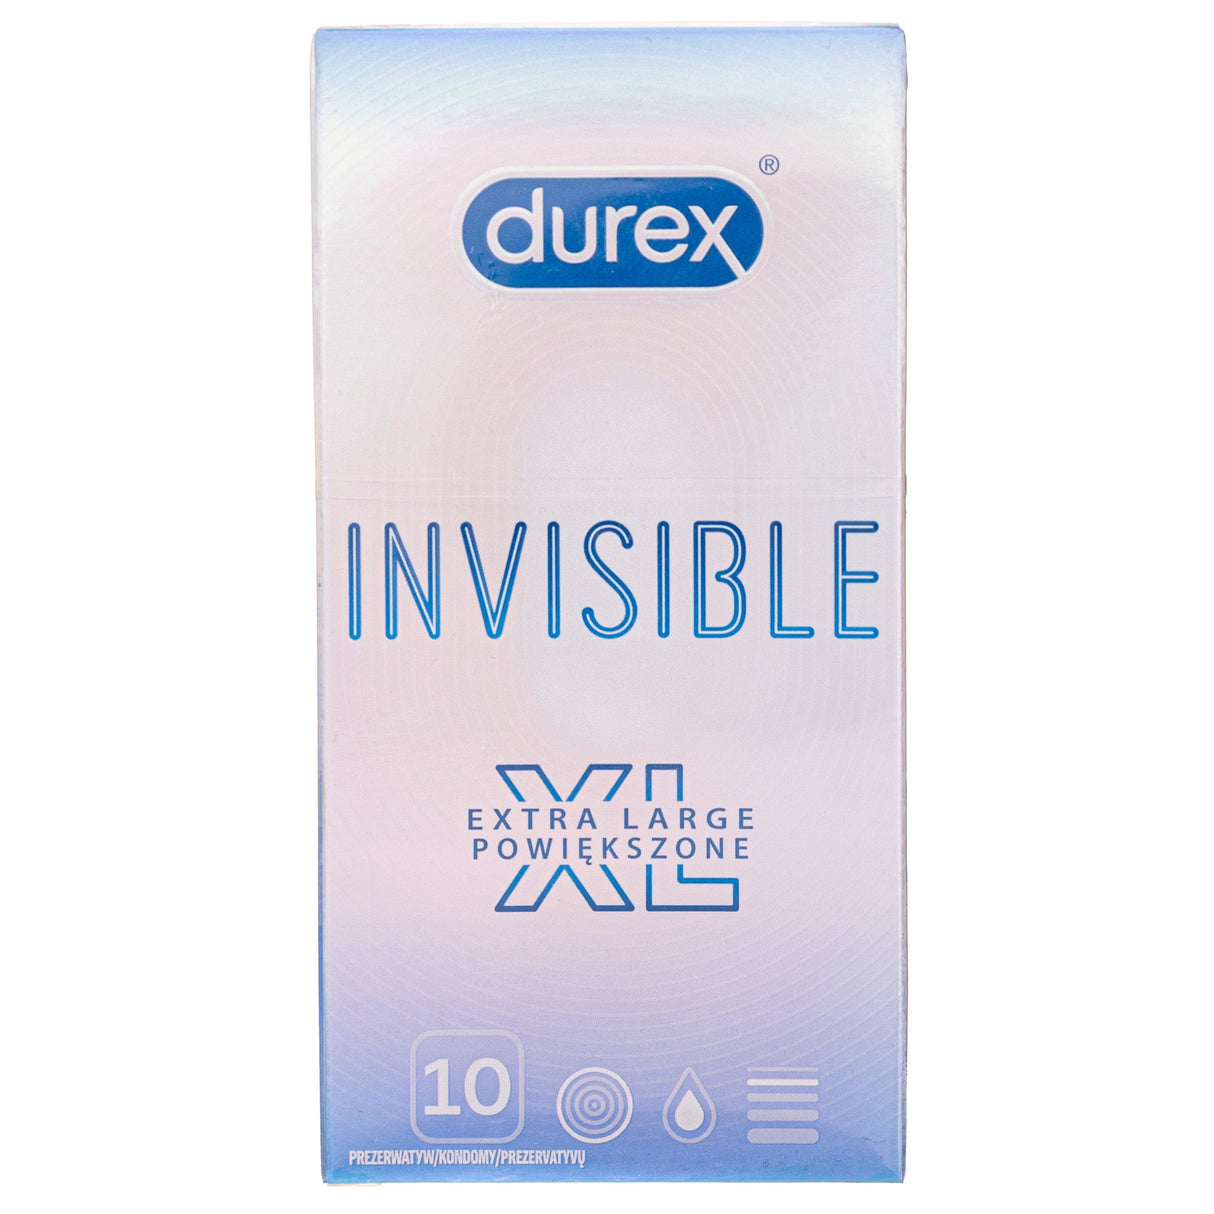 Durex Invisible XL Condoms - 10 pcs.